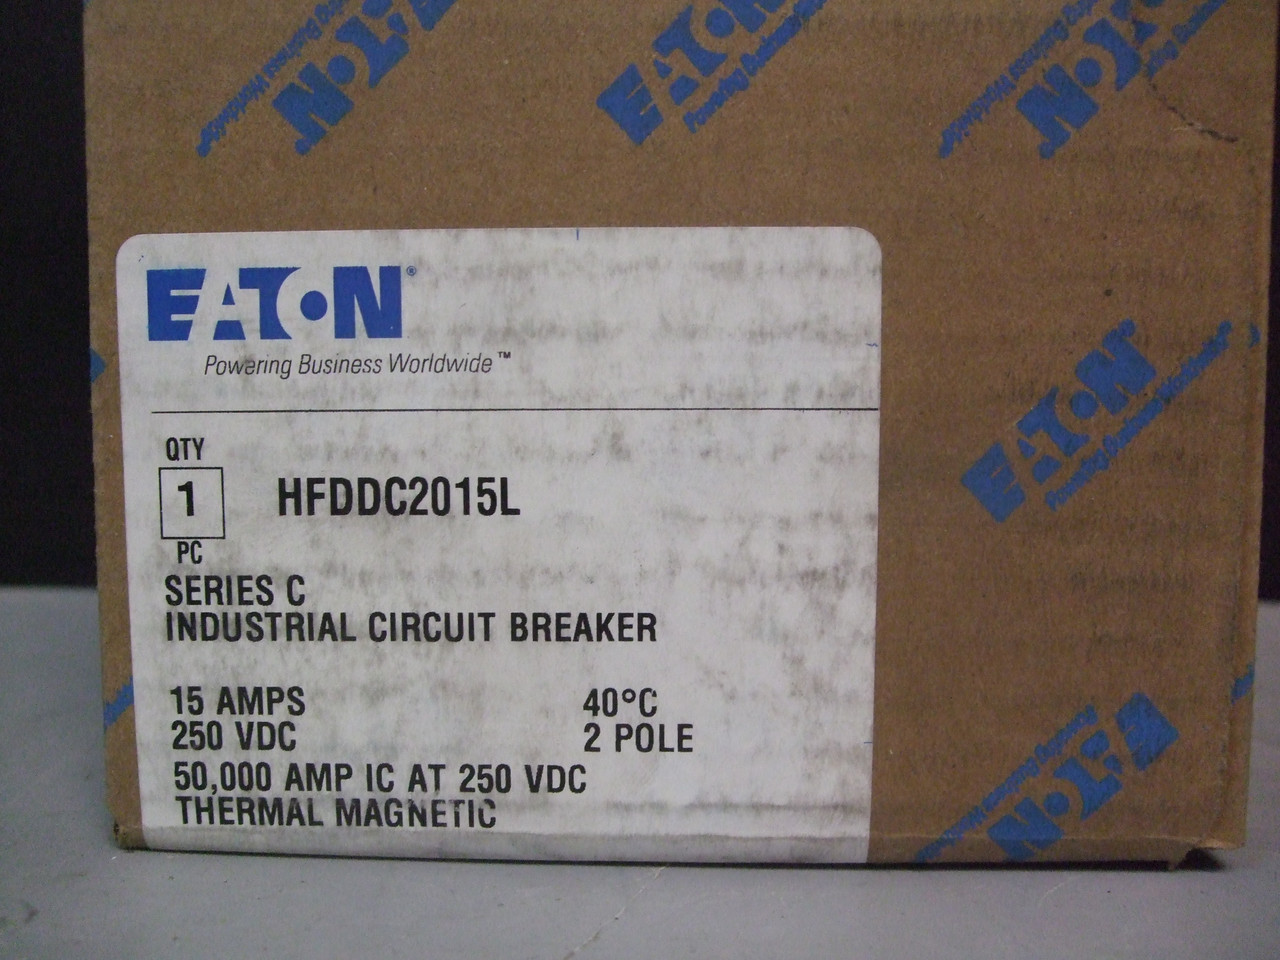 Eaton HFDDC2015L 2 Pole Industrial Circuit Breaker, 15 Amps - New In Box